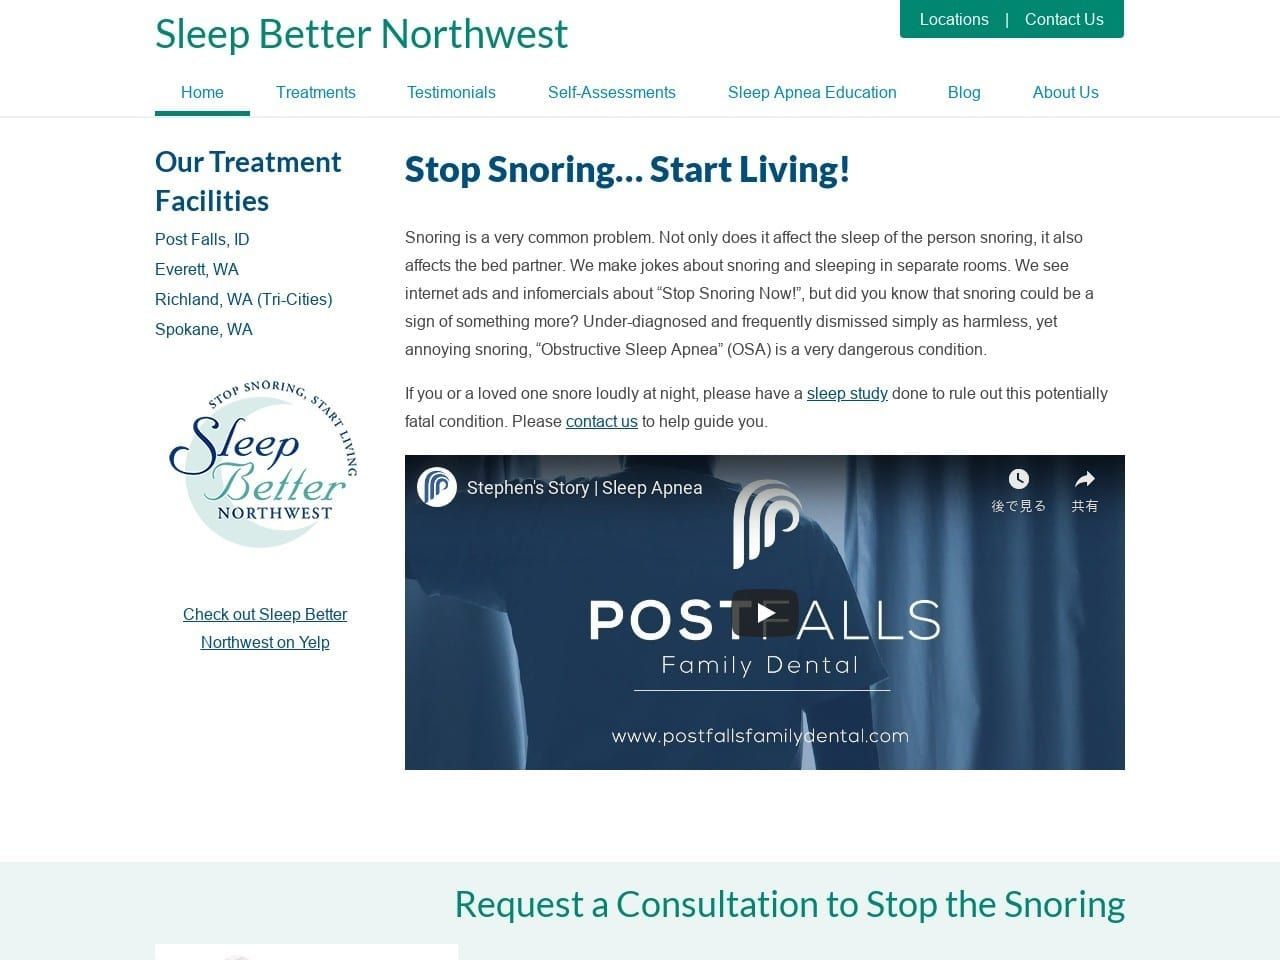 Sleep Better Northwest Website Screenshot from sleepbetternw.com